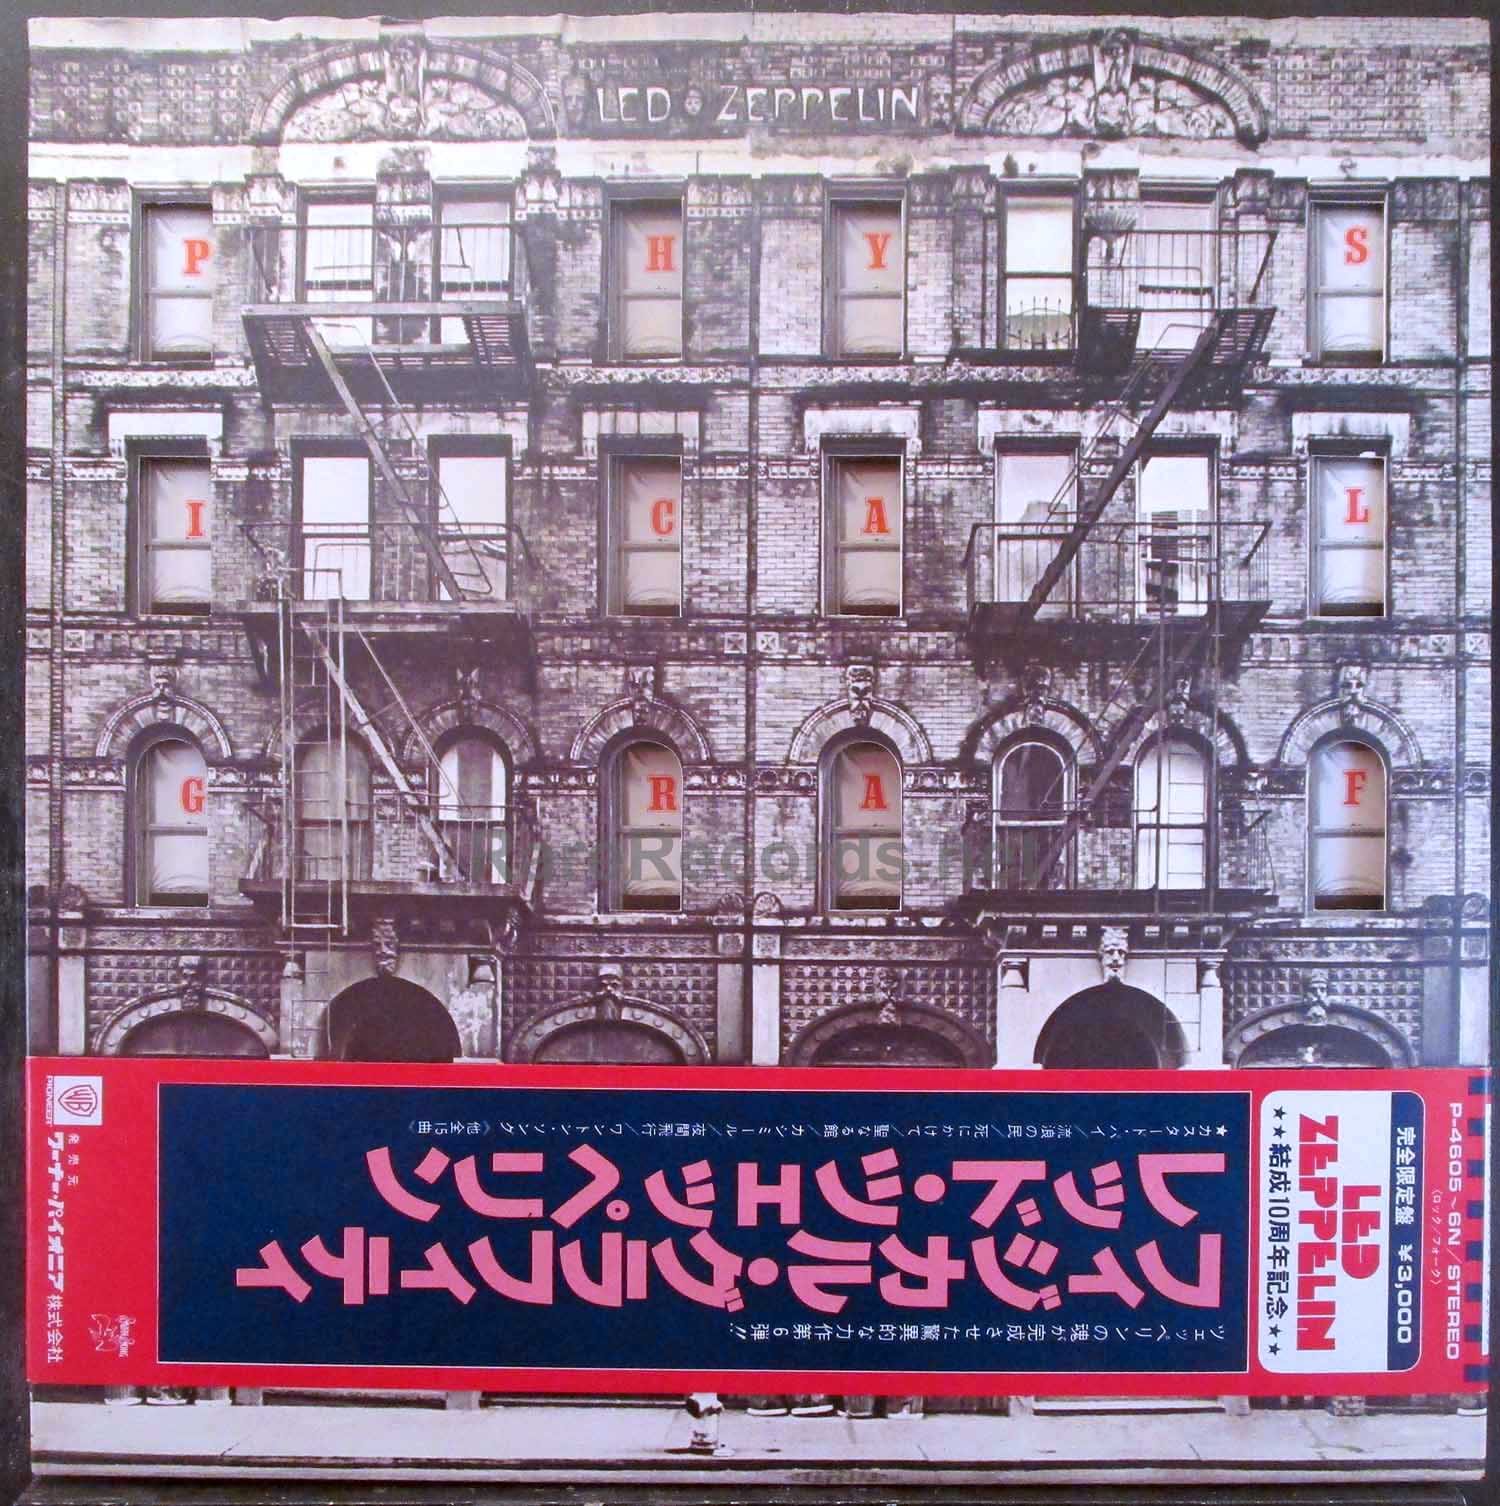 Led Zeppelin - Physical Graffiti Japan 2 LP set with obi